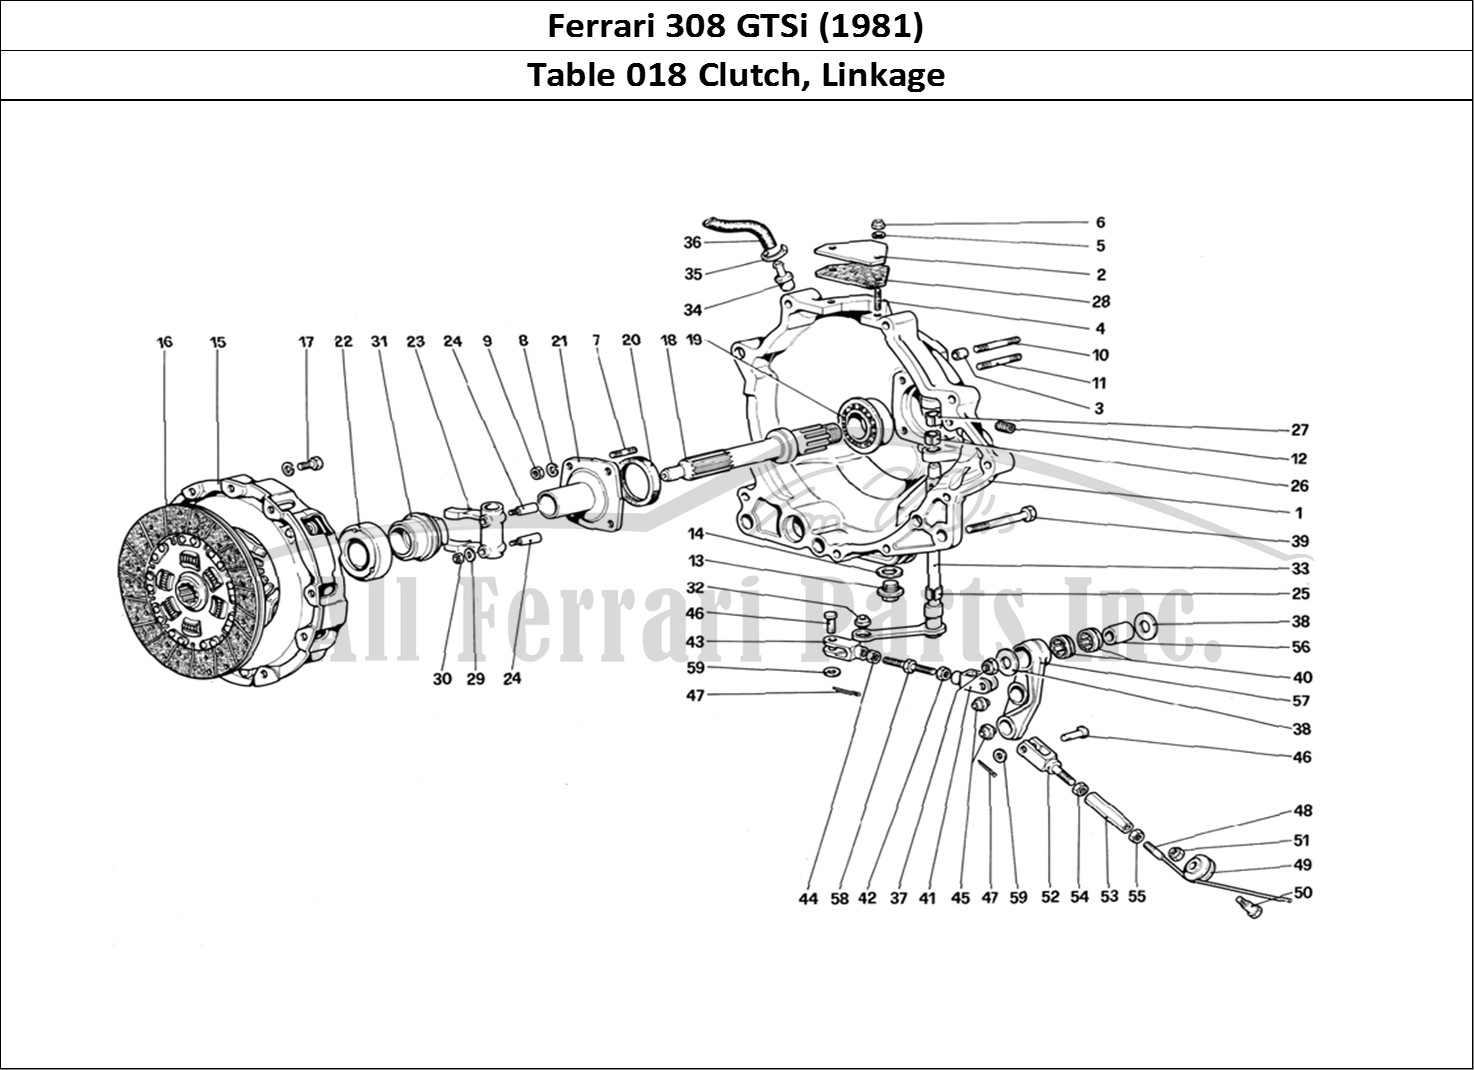 Ferrari Parts Ferrari 308 GTBi (1981) Page 018 Clutch and Controls